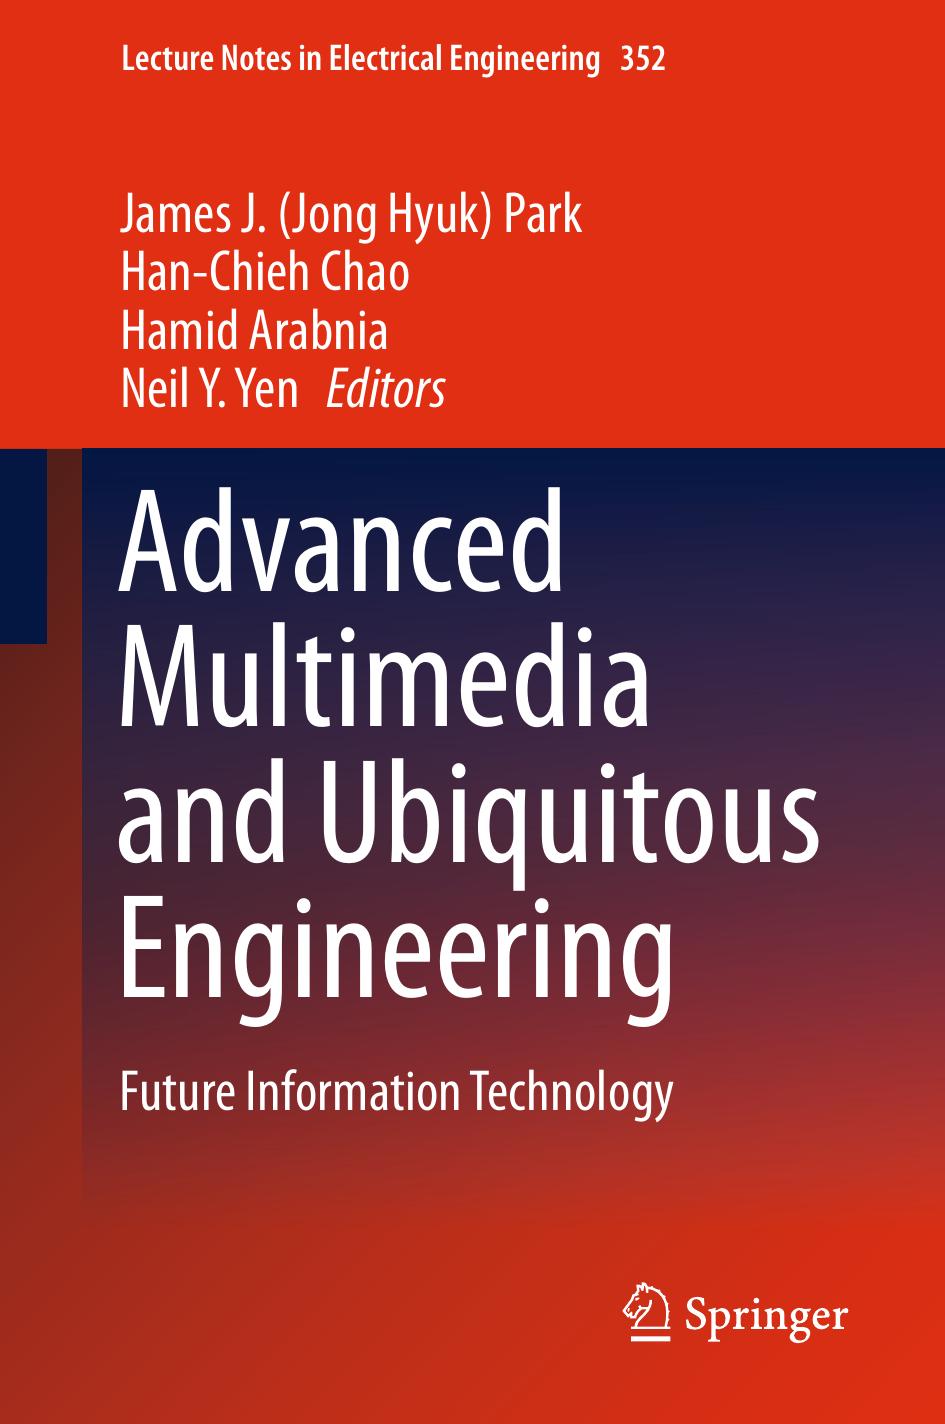 LNEE 352 - Advanced Multimedia and Ubiquitous Engineering